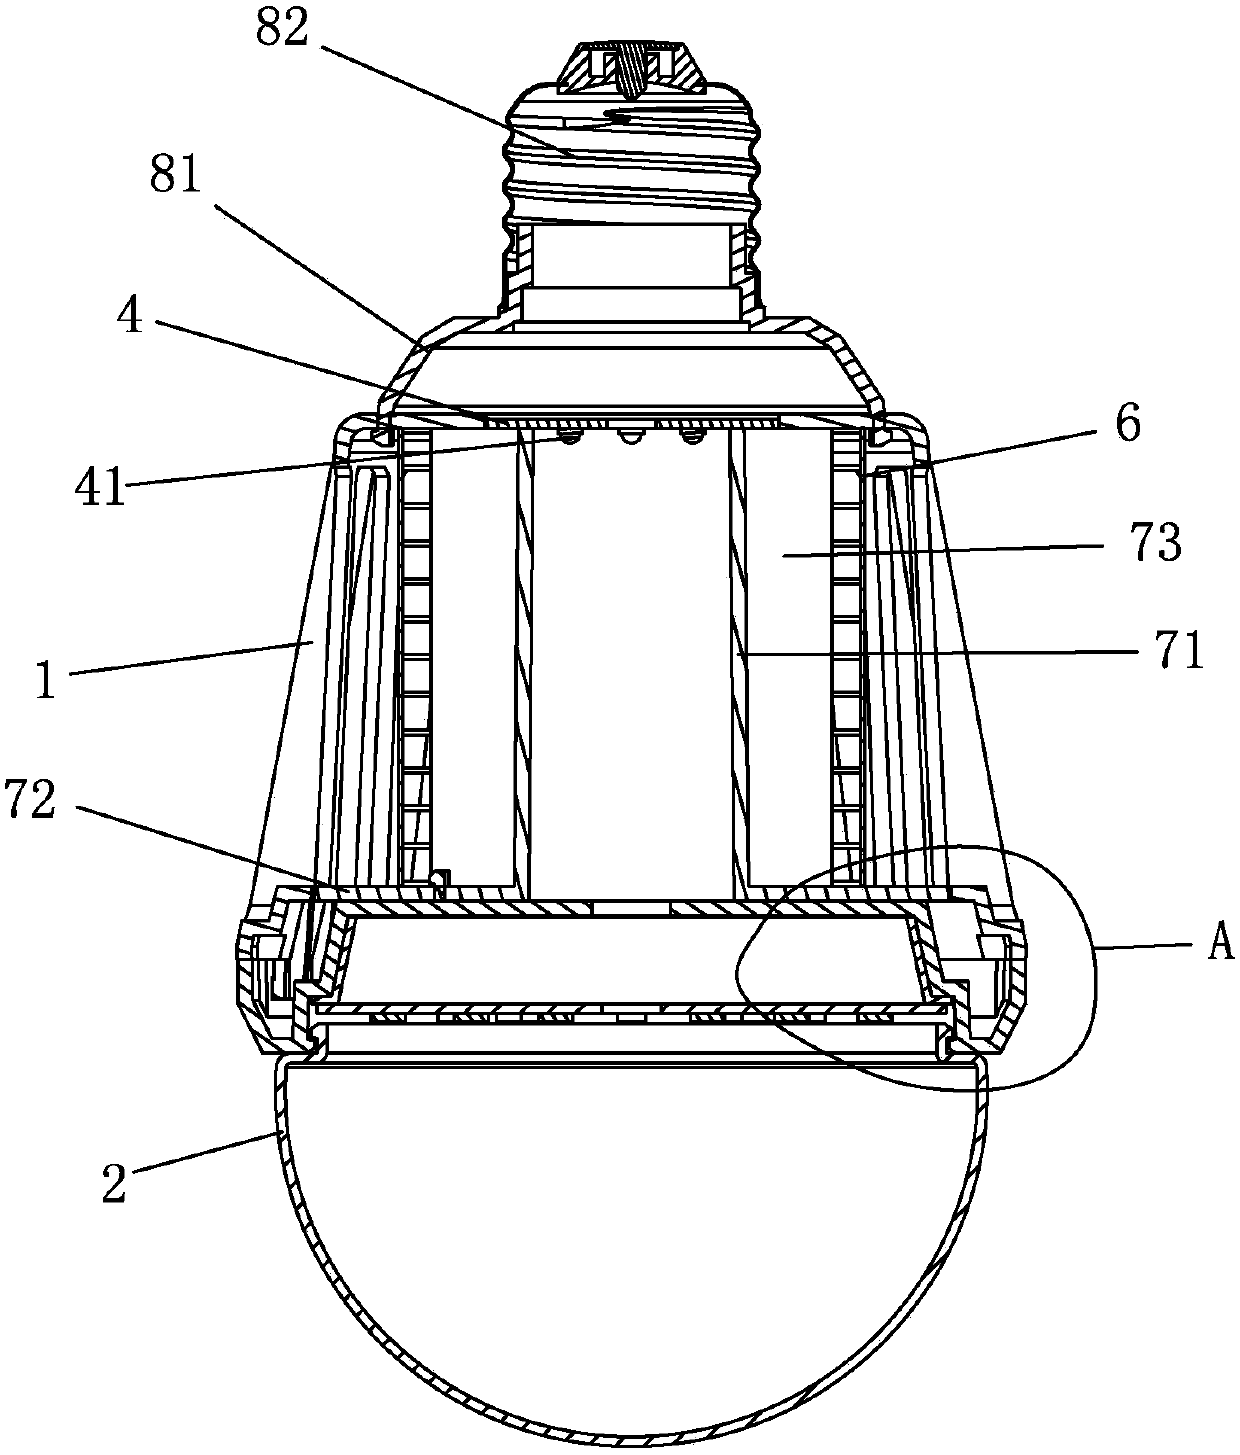 Novel intelligent photocatalyst mosquito-killing bulb lamp